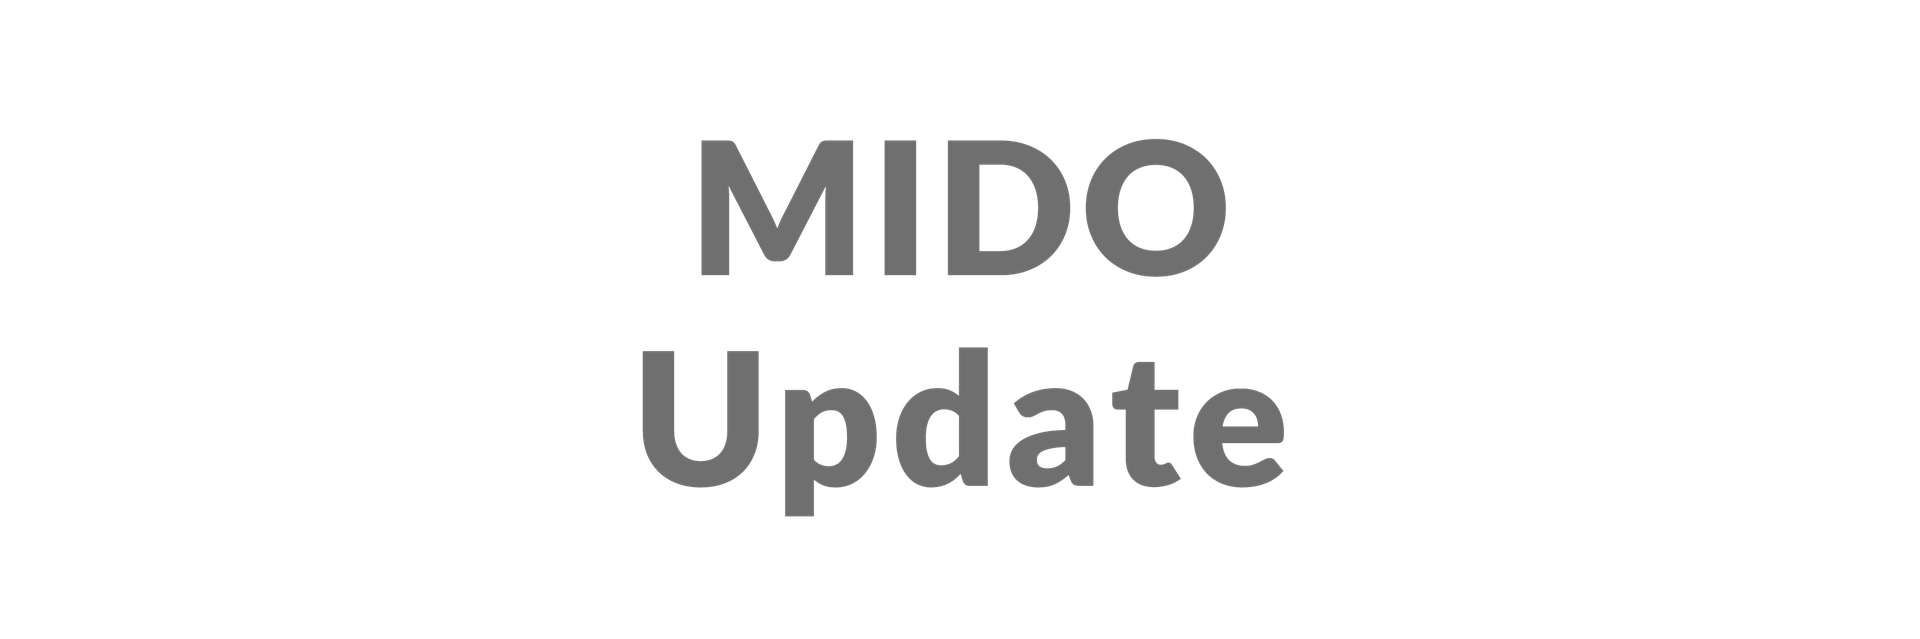 MIDO update